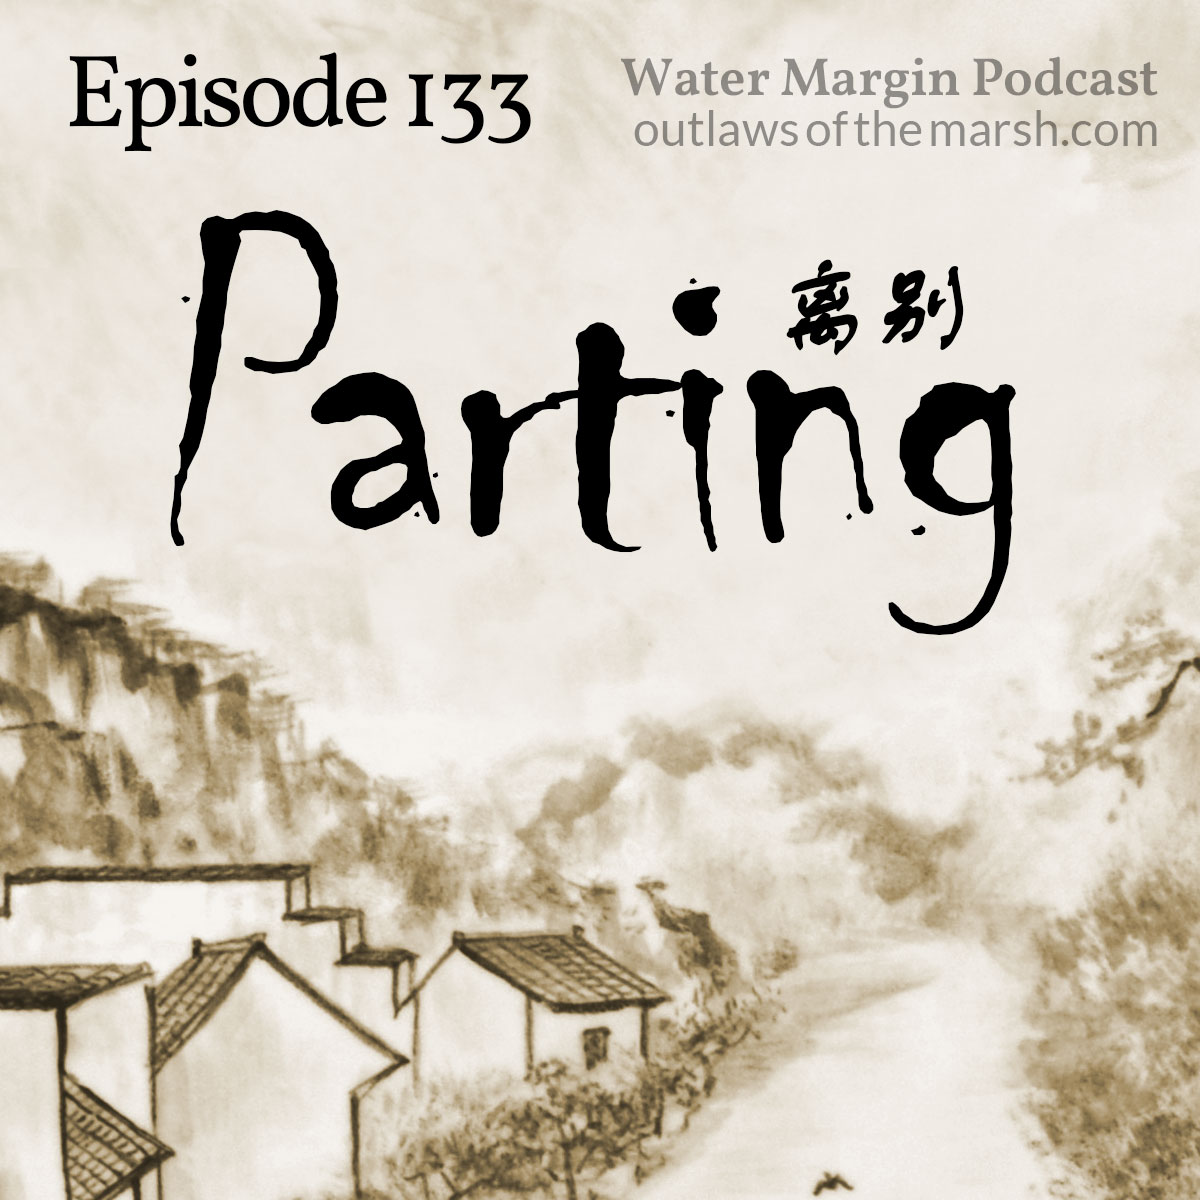 Water Margin Podcast: Episode 133